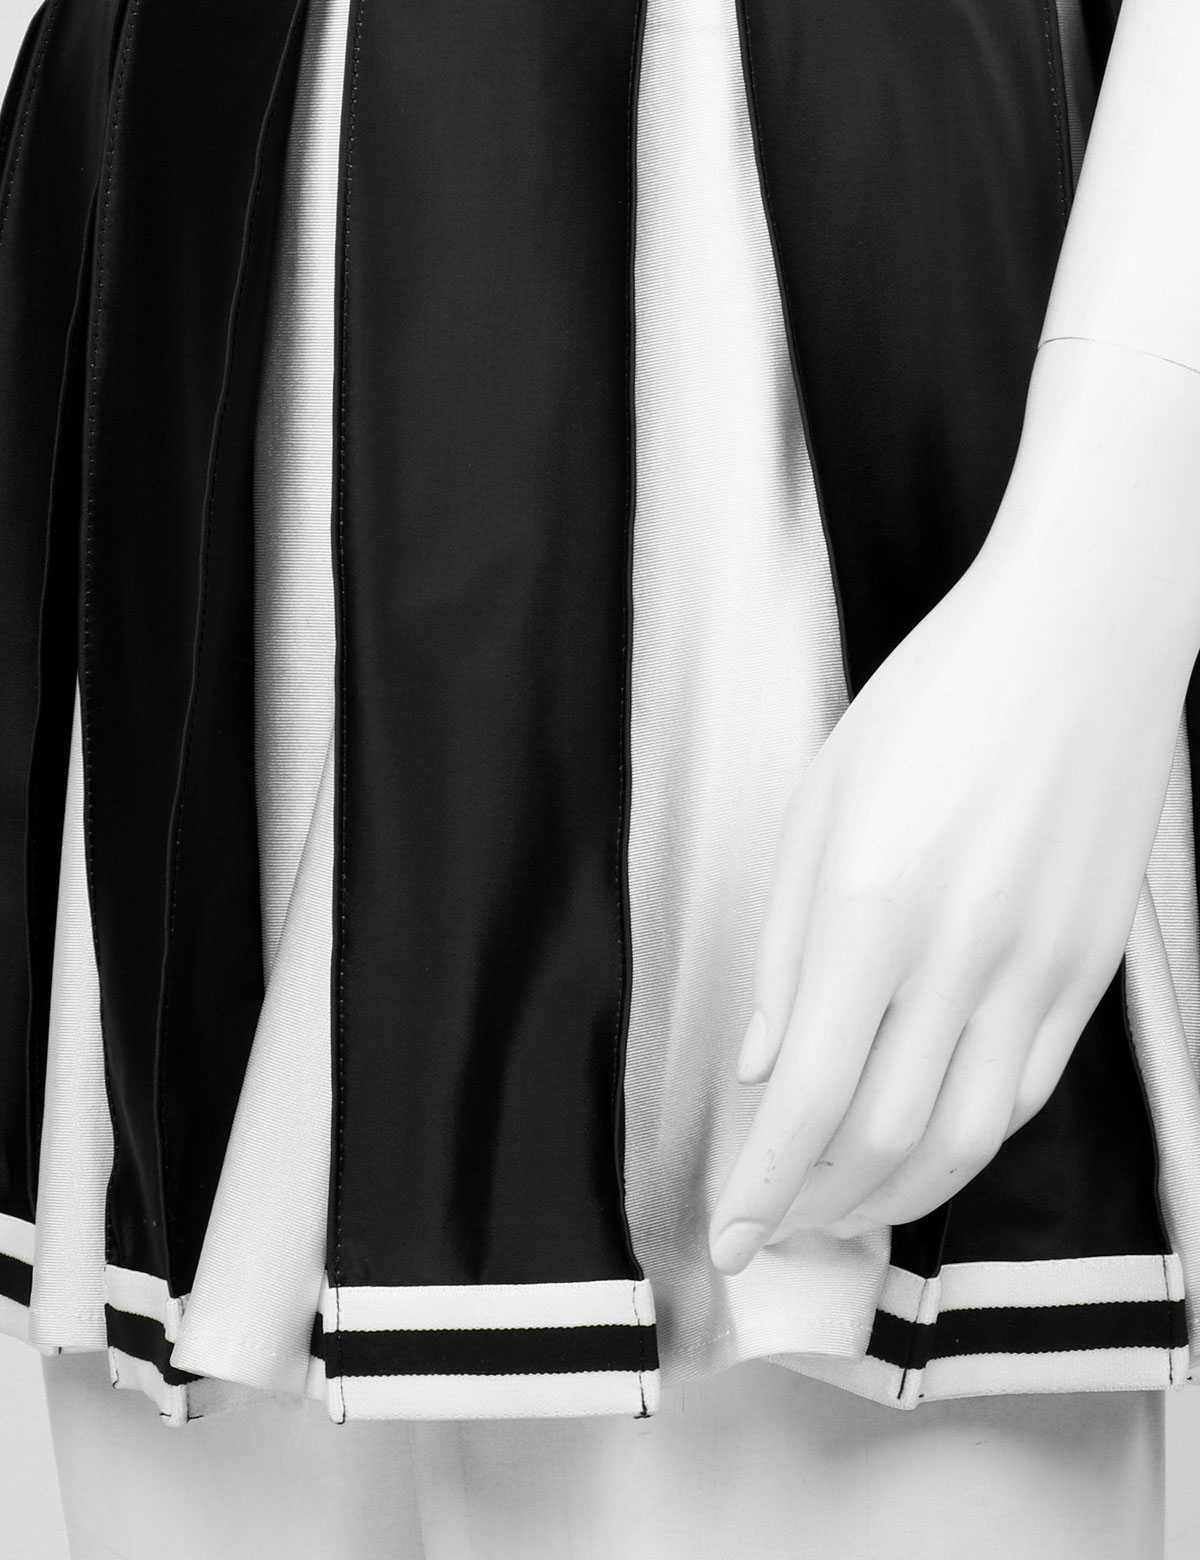 Women Adults Japanese Cheerleader Gleeing Schoolgirl Costume Uniform Elastic Striped Back Cross Crop Top with Pleated Skirt